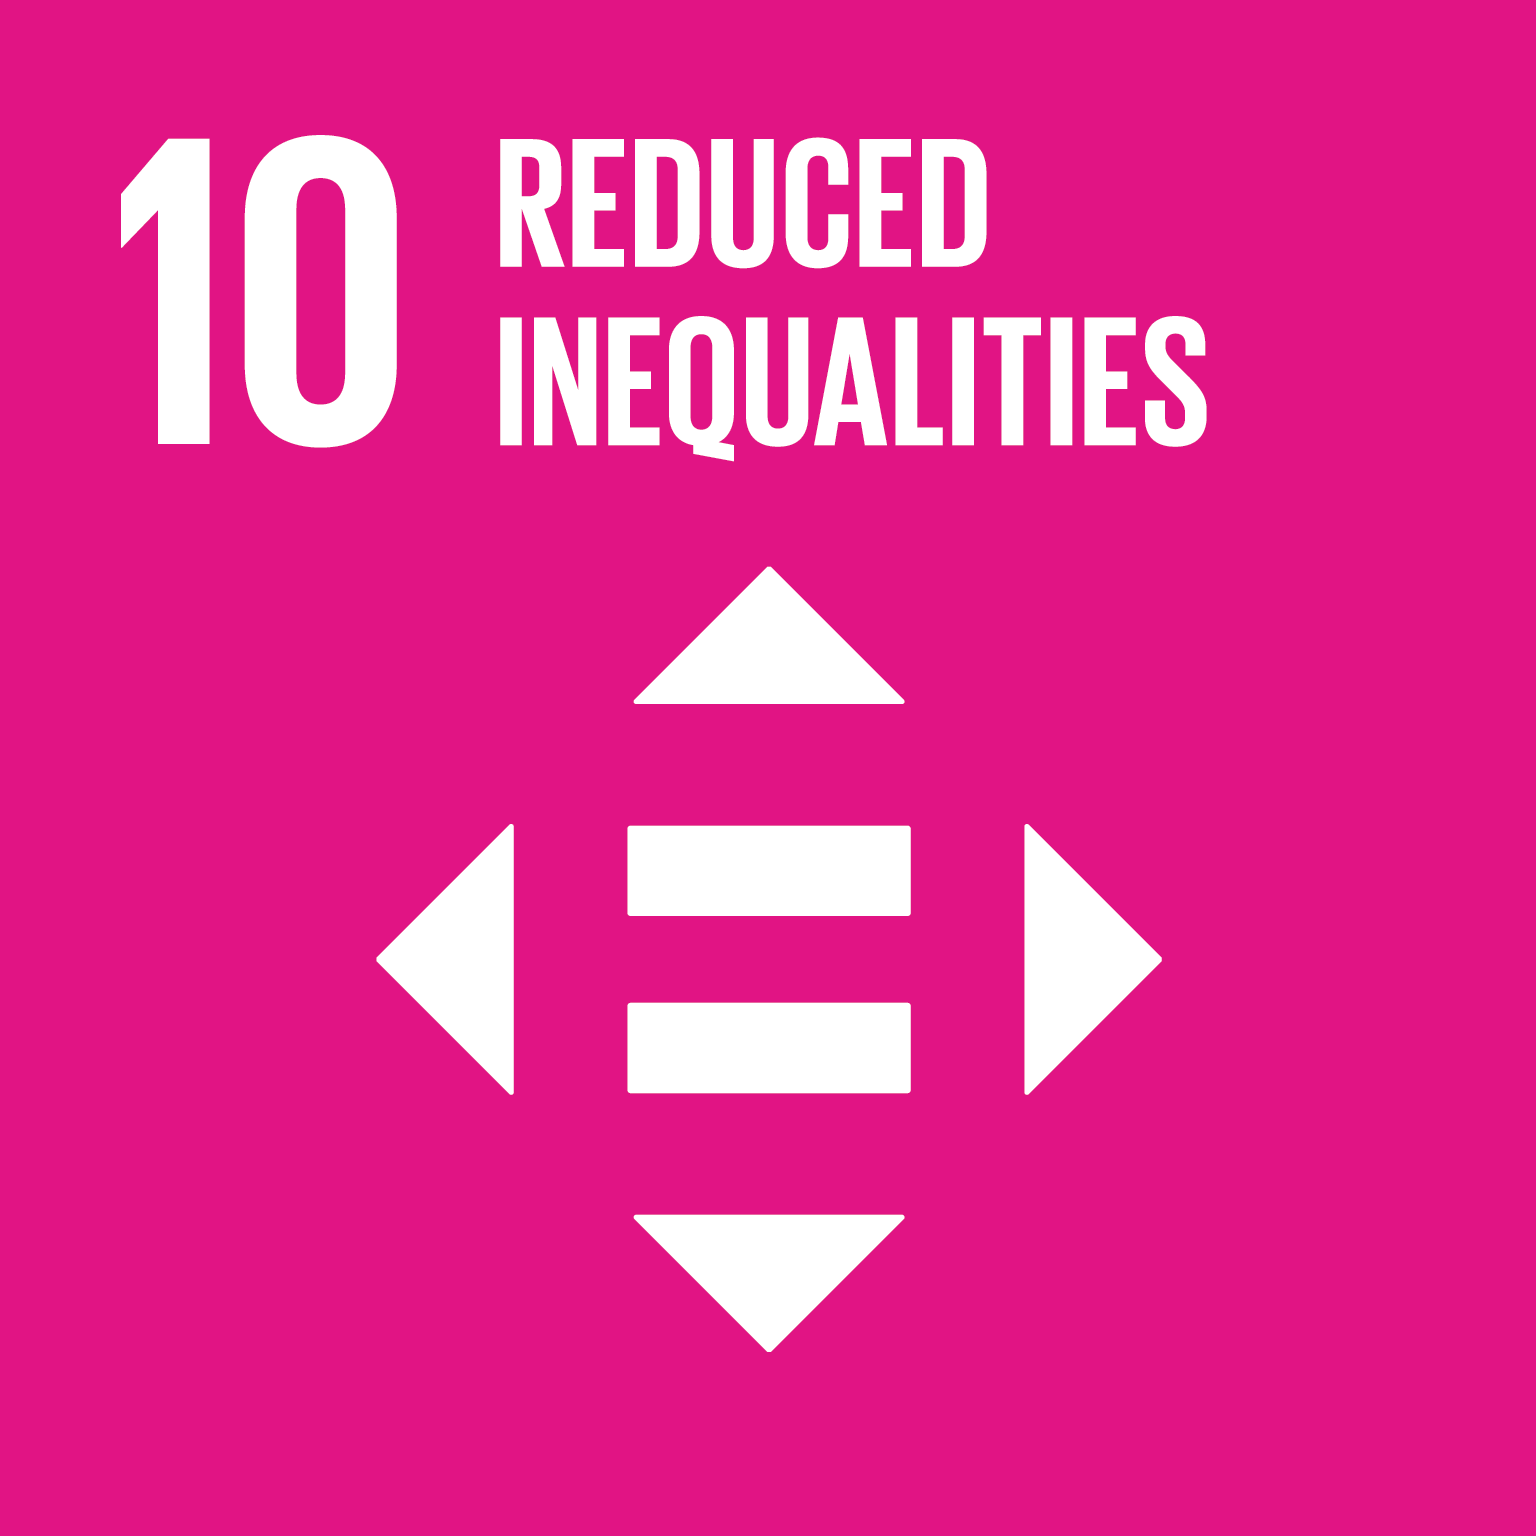 Reduce inequalities